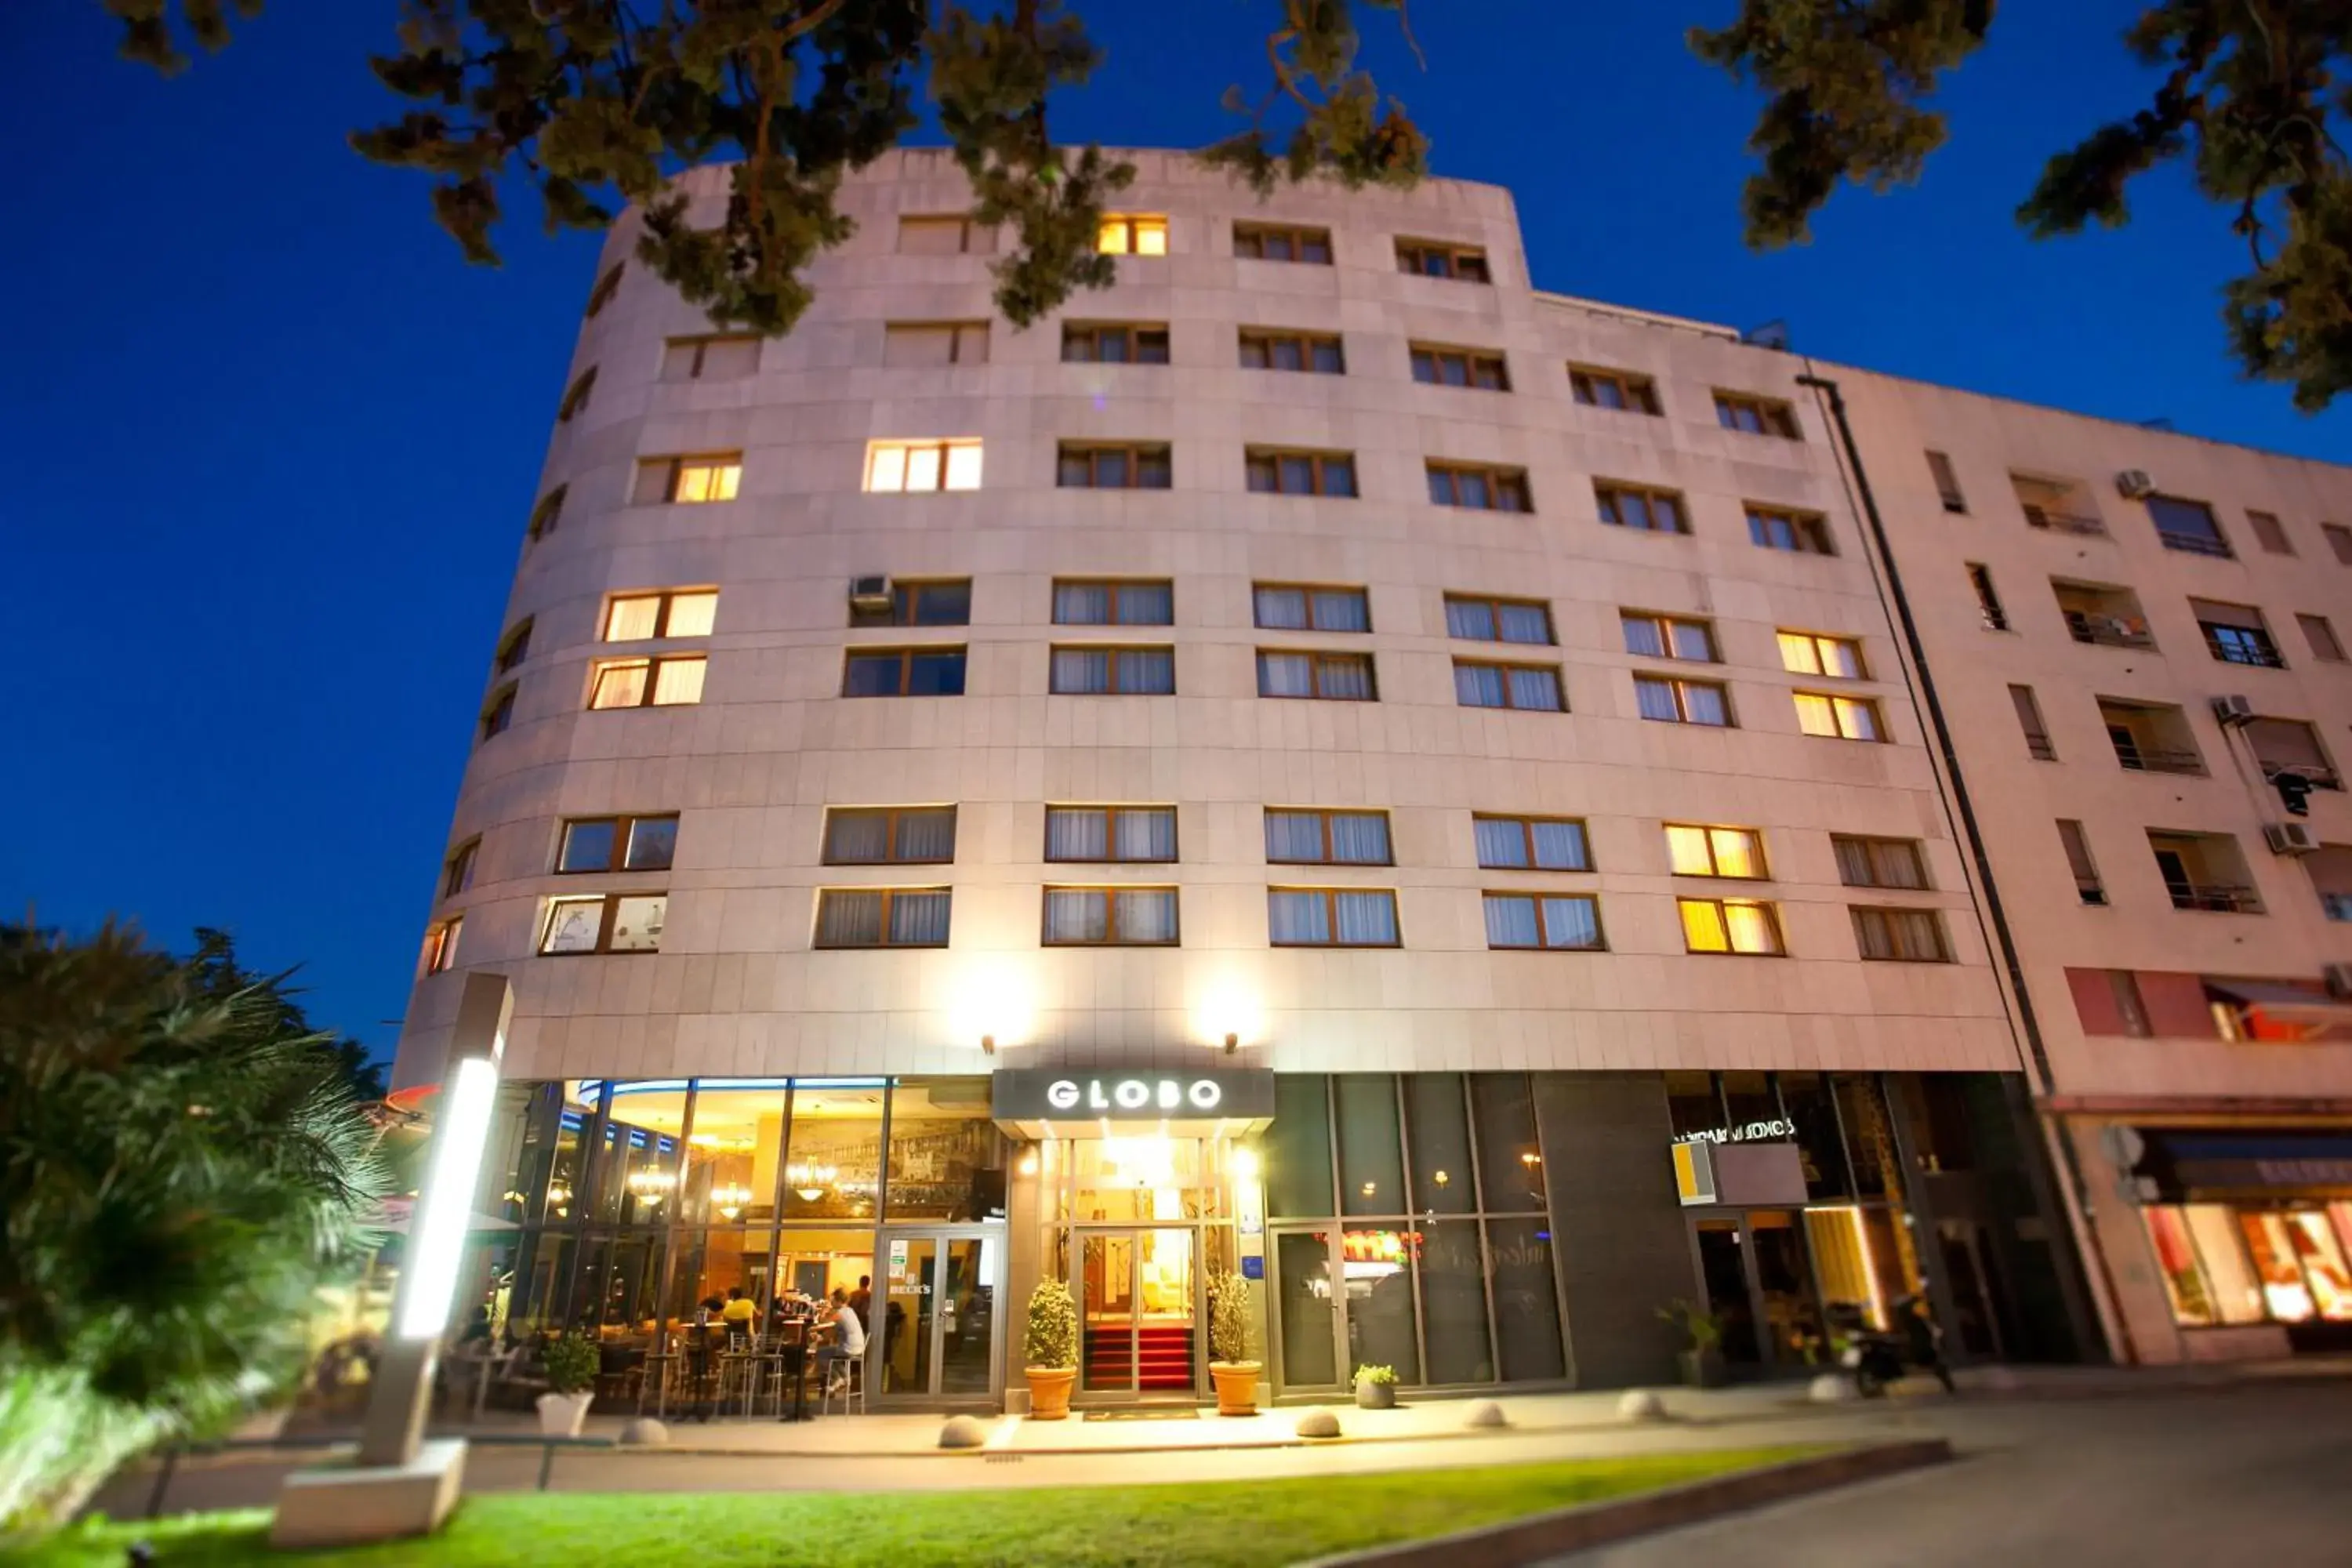 Facade/entrance in Hotel Globo